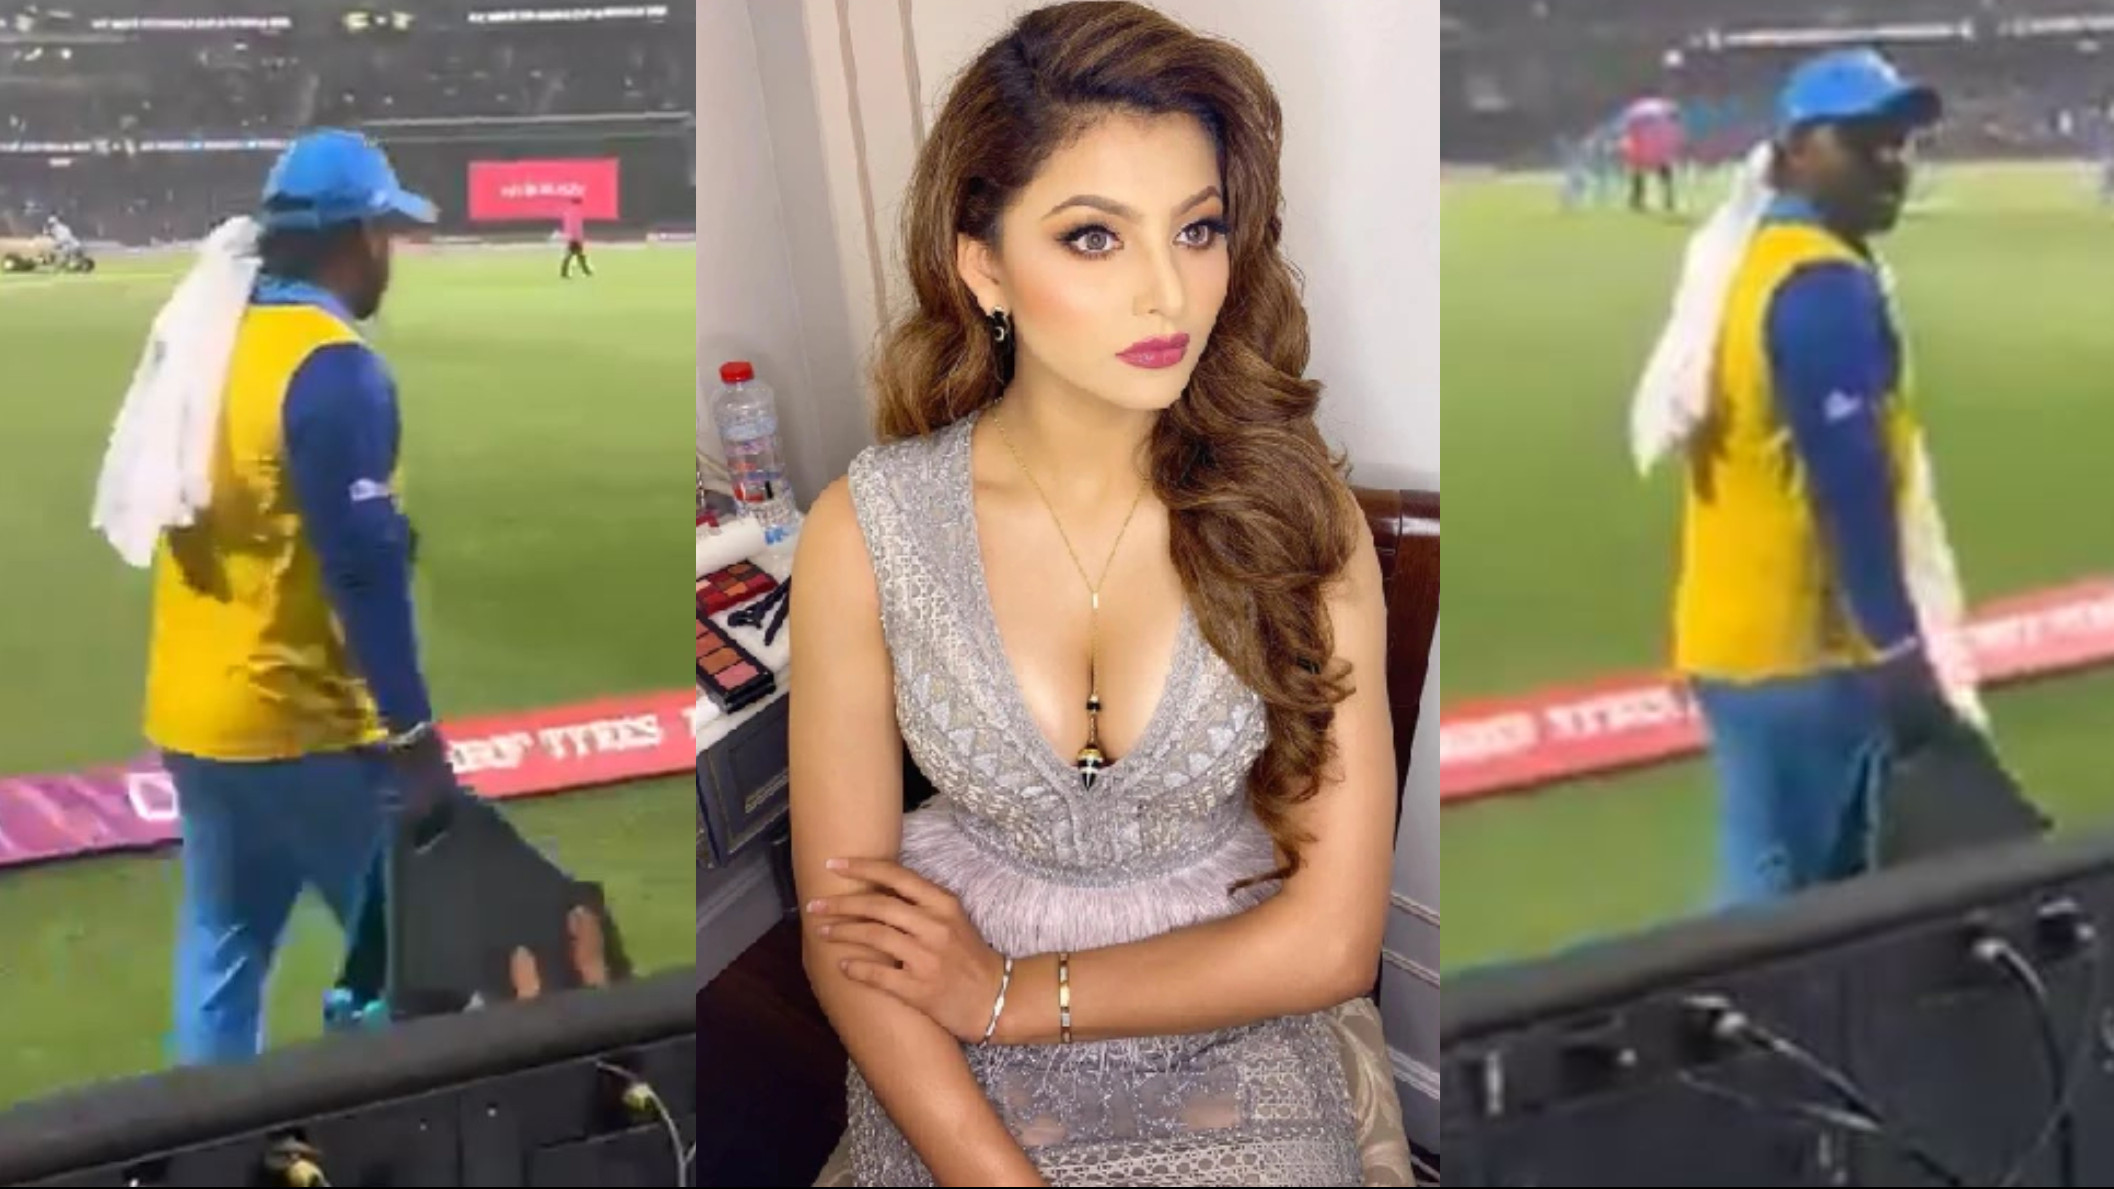 T20 World Cup 2022: WATCH- Rishabh Pant gives apt reply after spectators mock him by saying “Urvashi bula rhi hai”